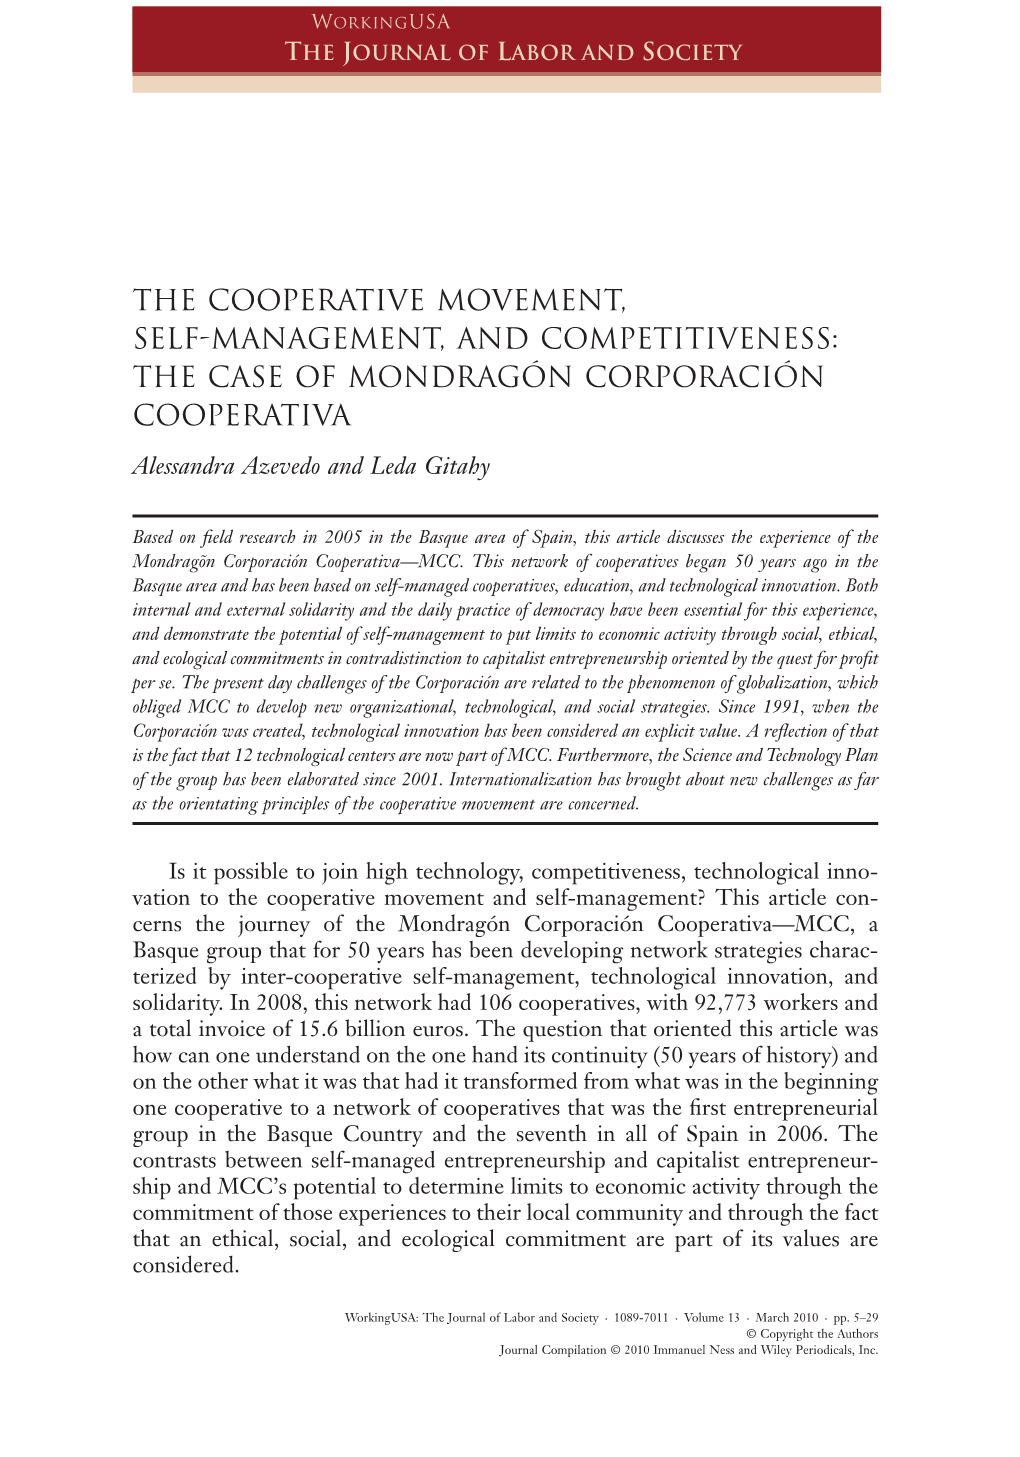 THE COOPERATIVE MOVEMENT, SELF-MANAGEMENT, and COMPETITIVENESS: the CASE of MONDRAGÓN CORPORACIÓN COOPERATIVA Wusa 270 5..30